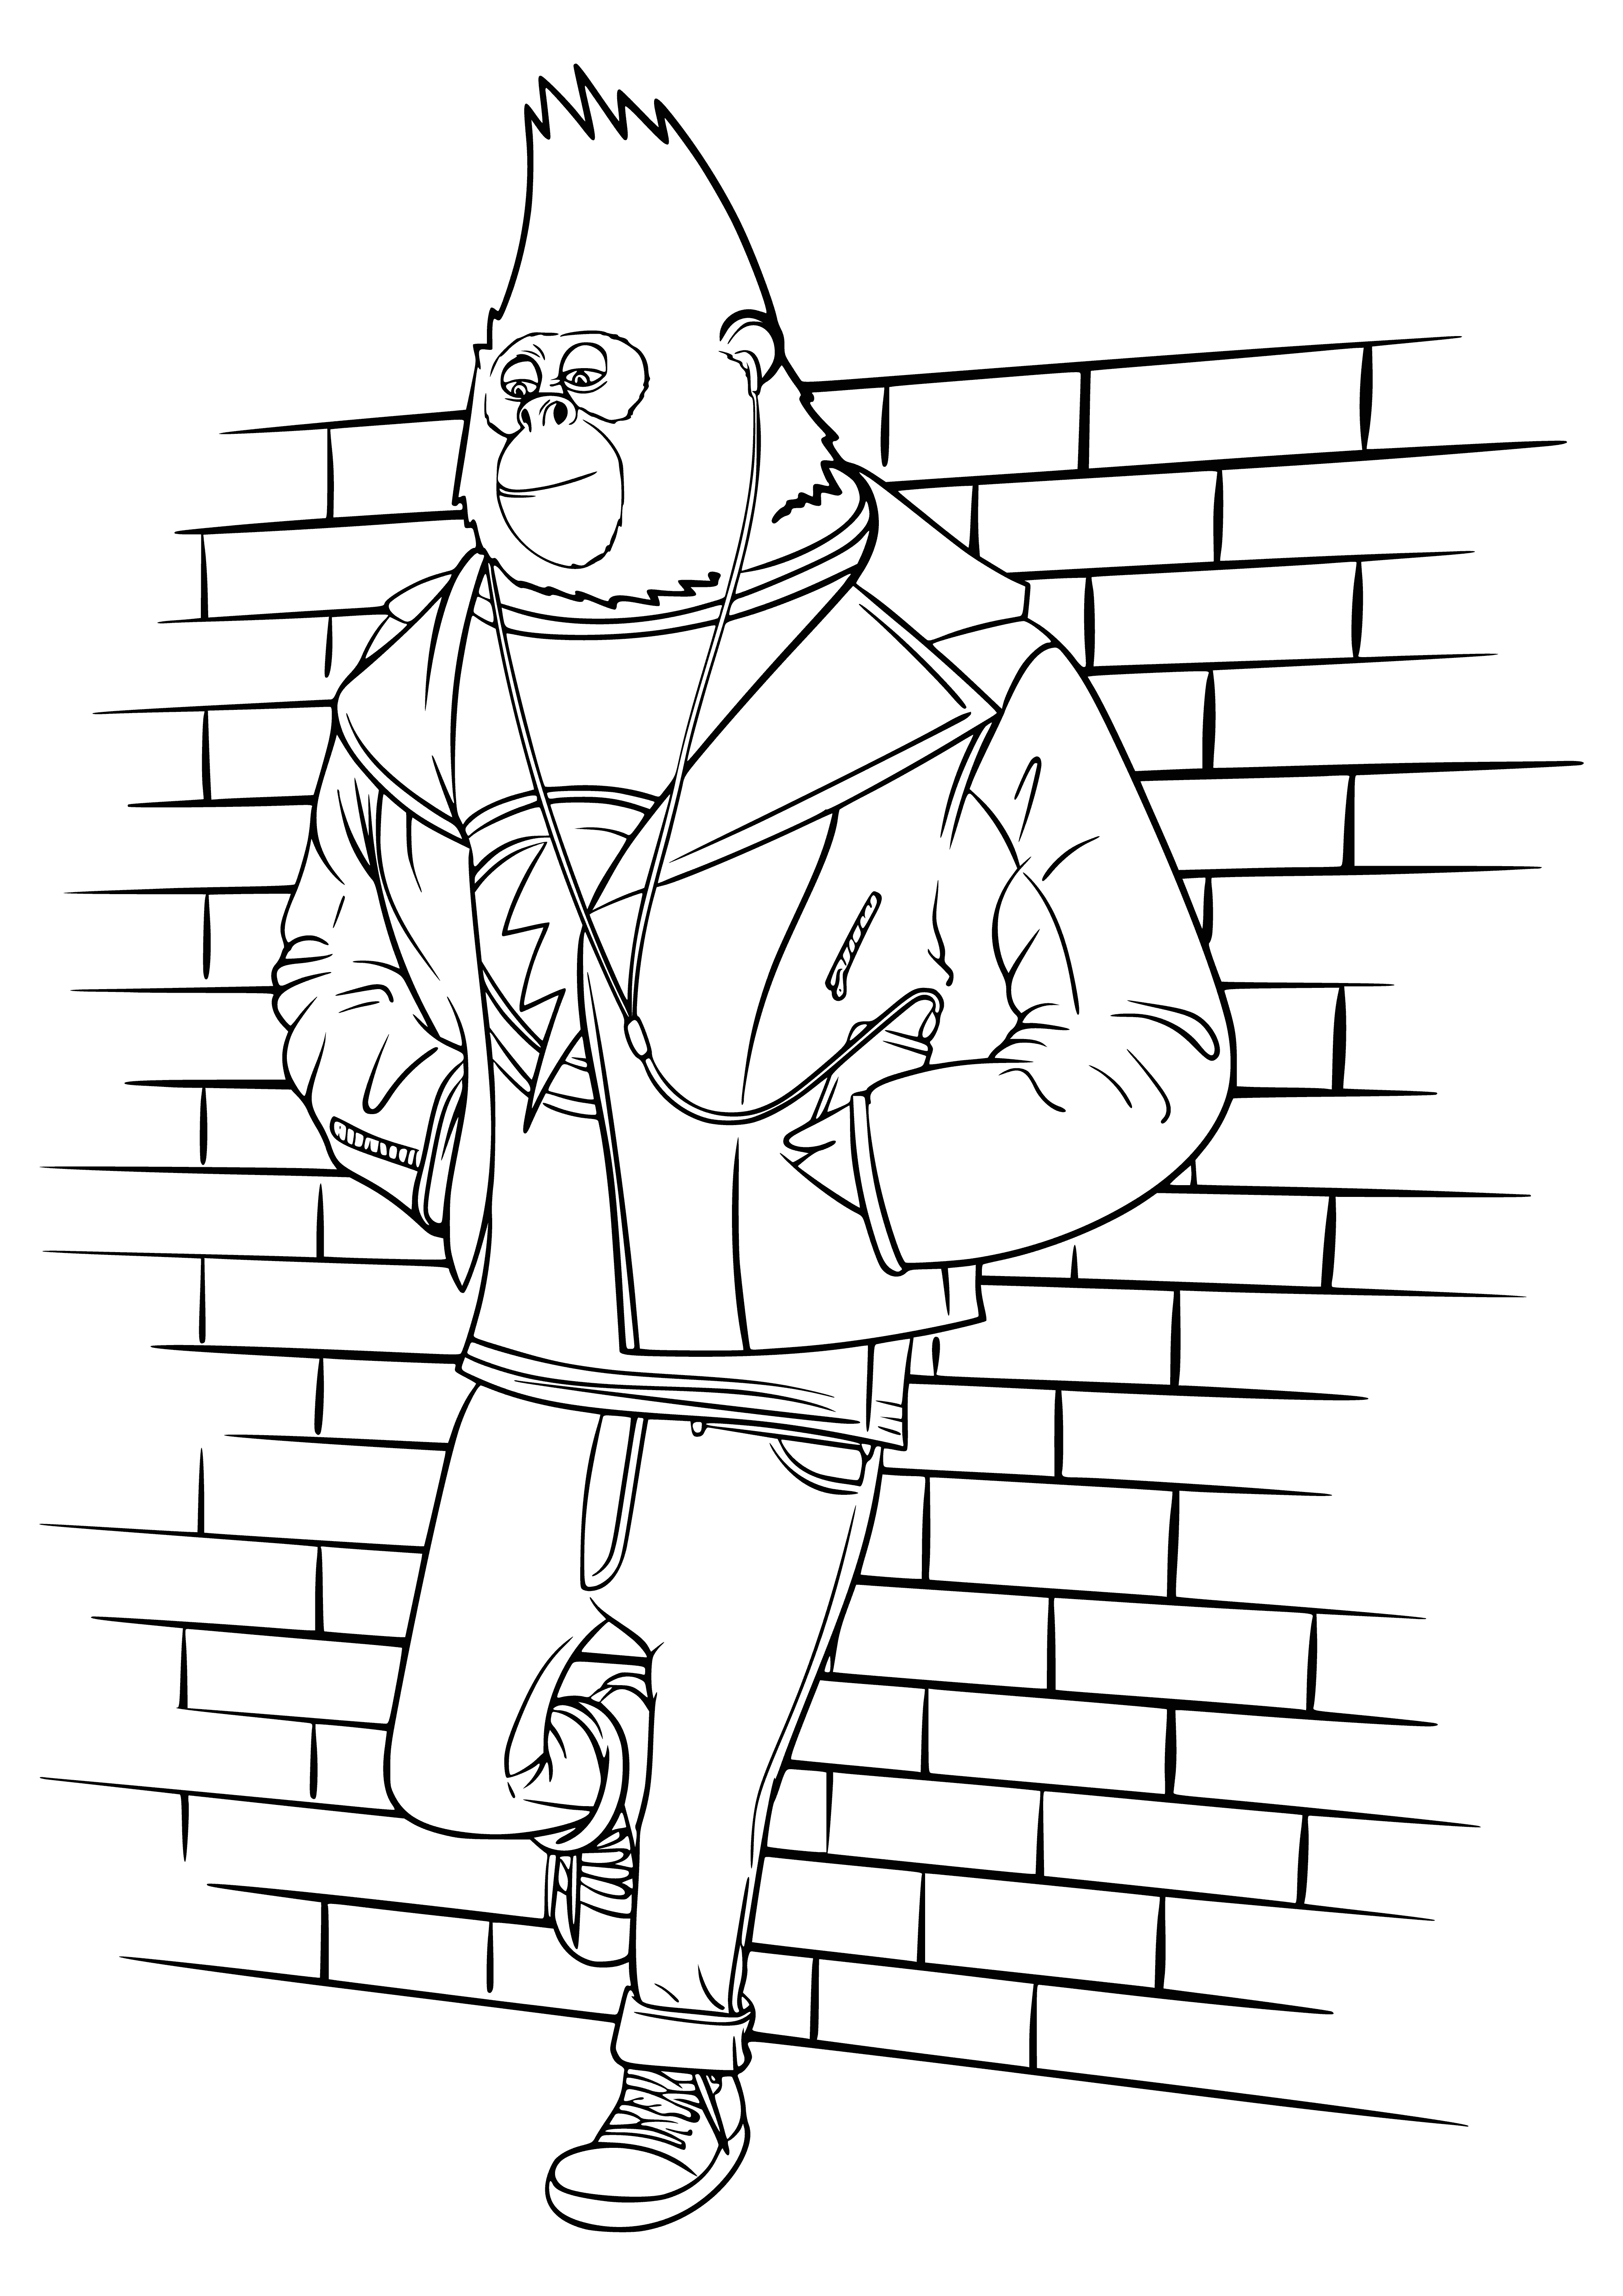 Gorilla Johnny coloring page